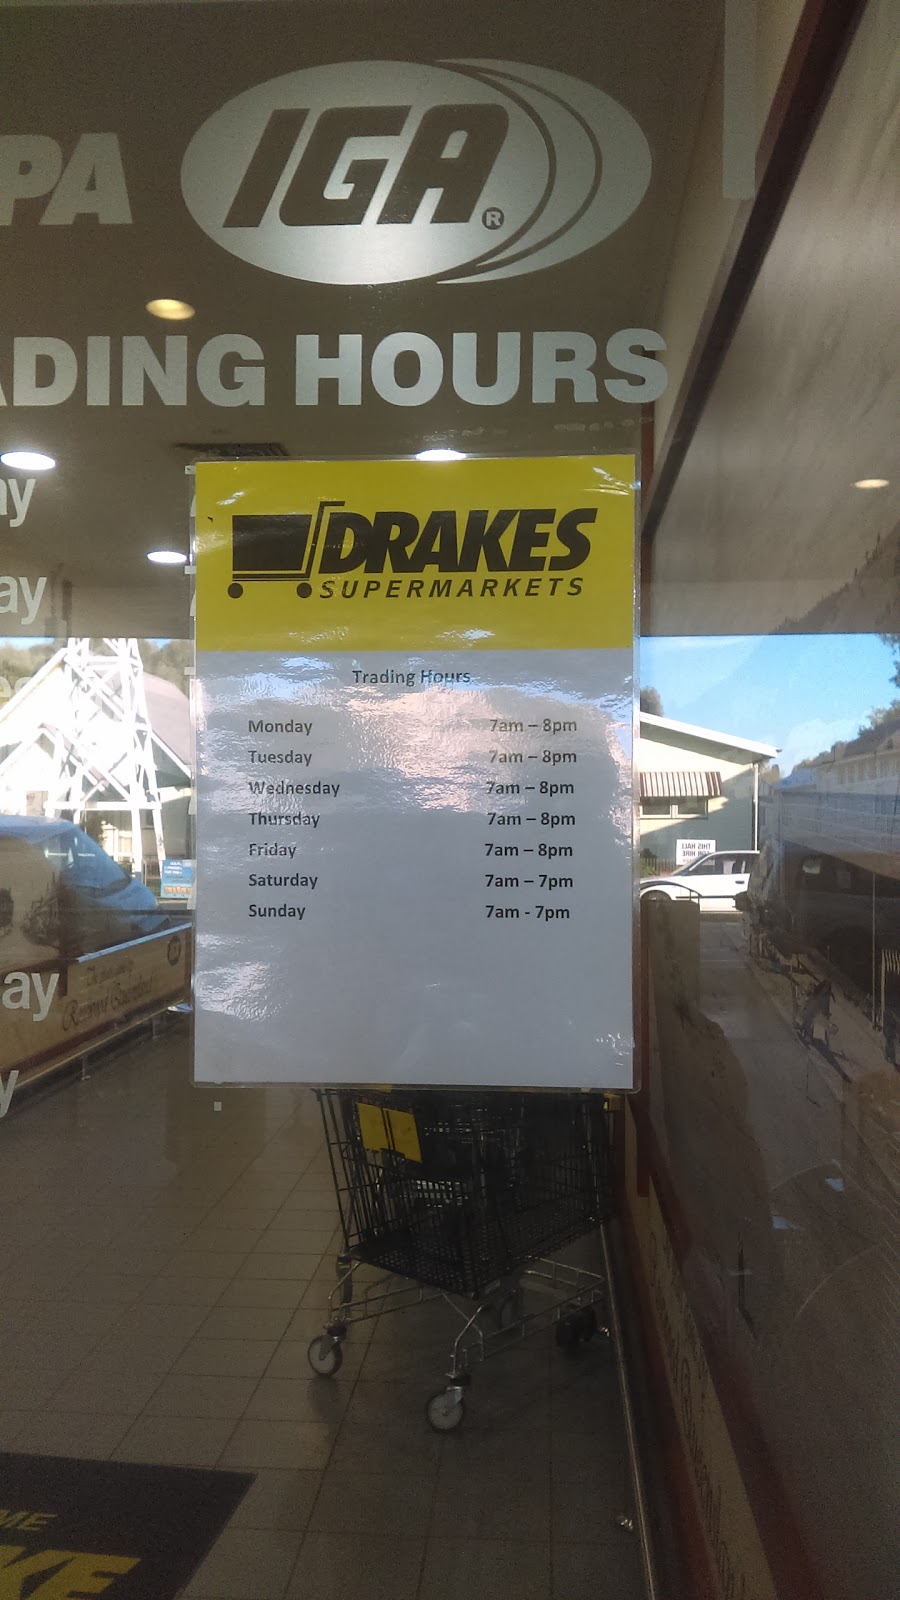 Drakes Rosewood | supermarket | 44 John St, Rosewood QLD 4340, Australia | 0754616000 OR +61 7 5461 6000